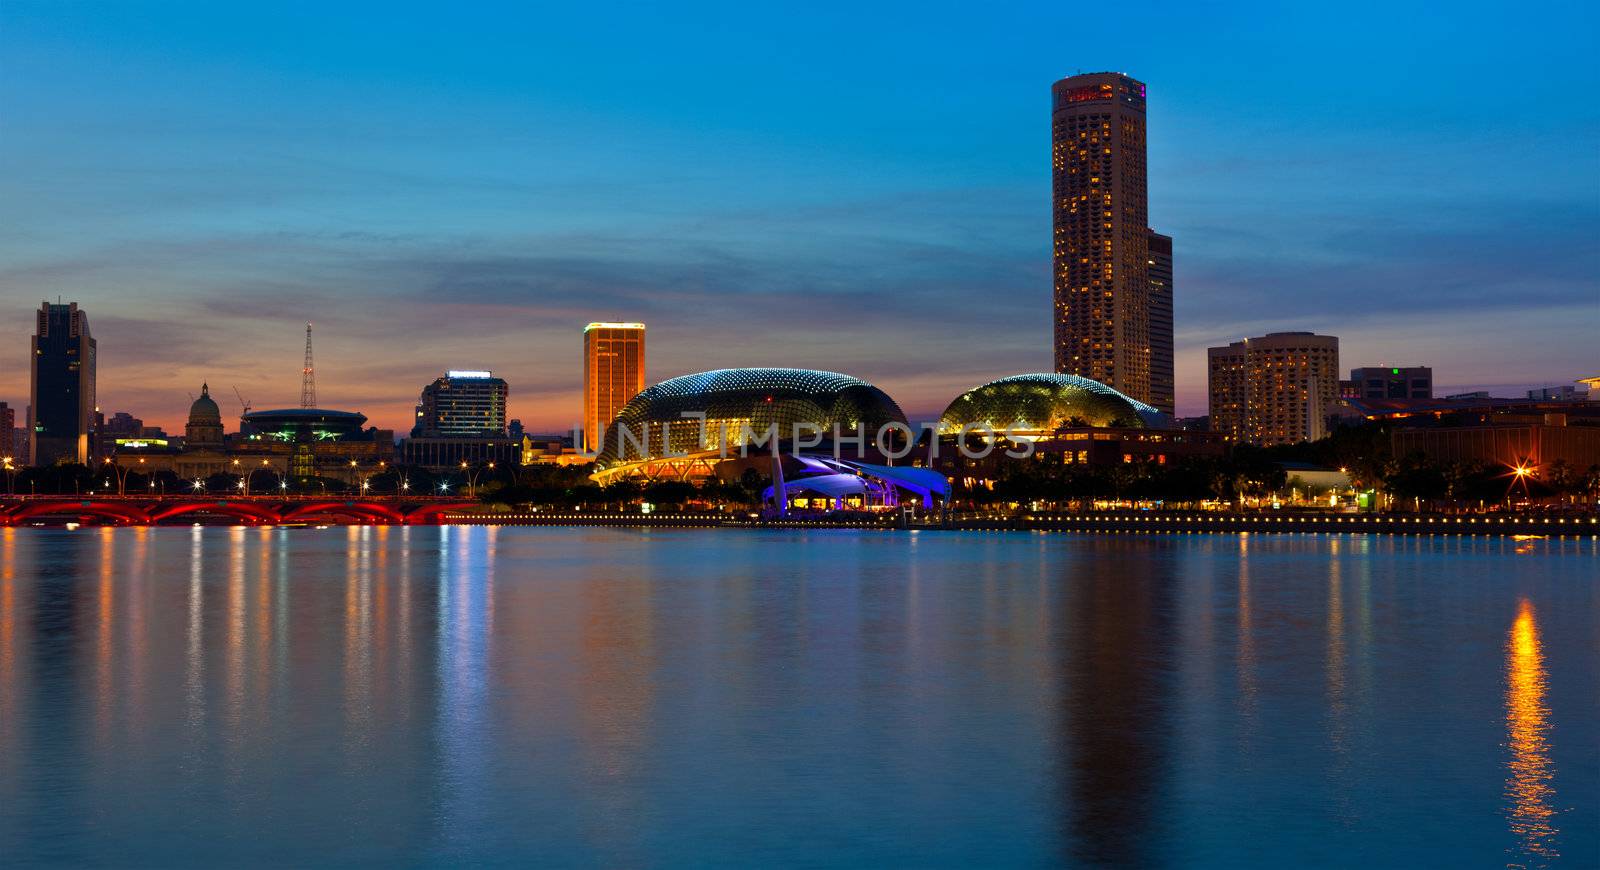 Singapore skyline evening by dimol